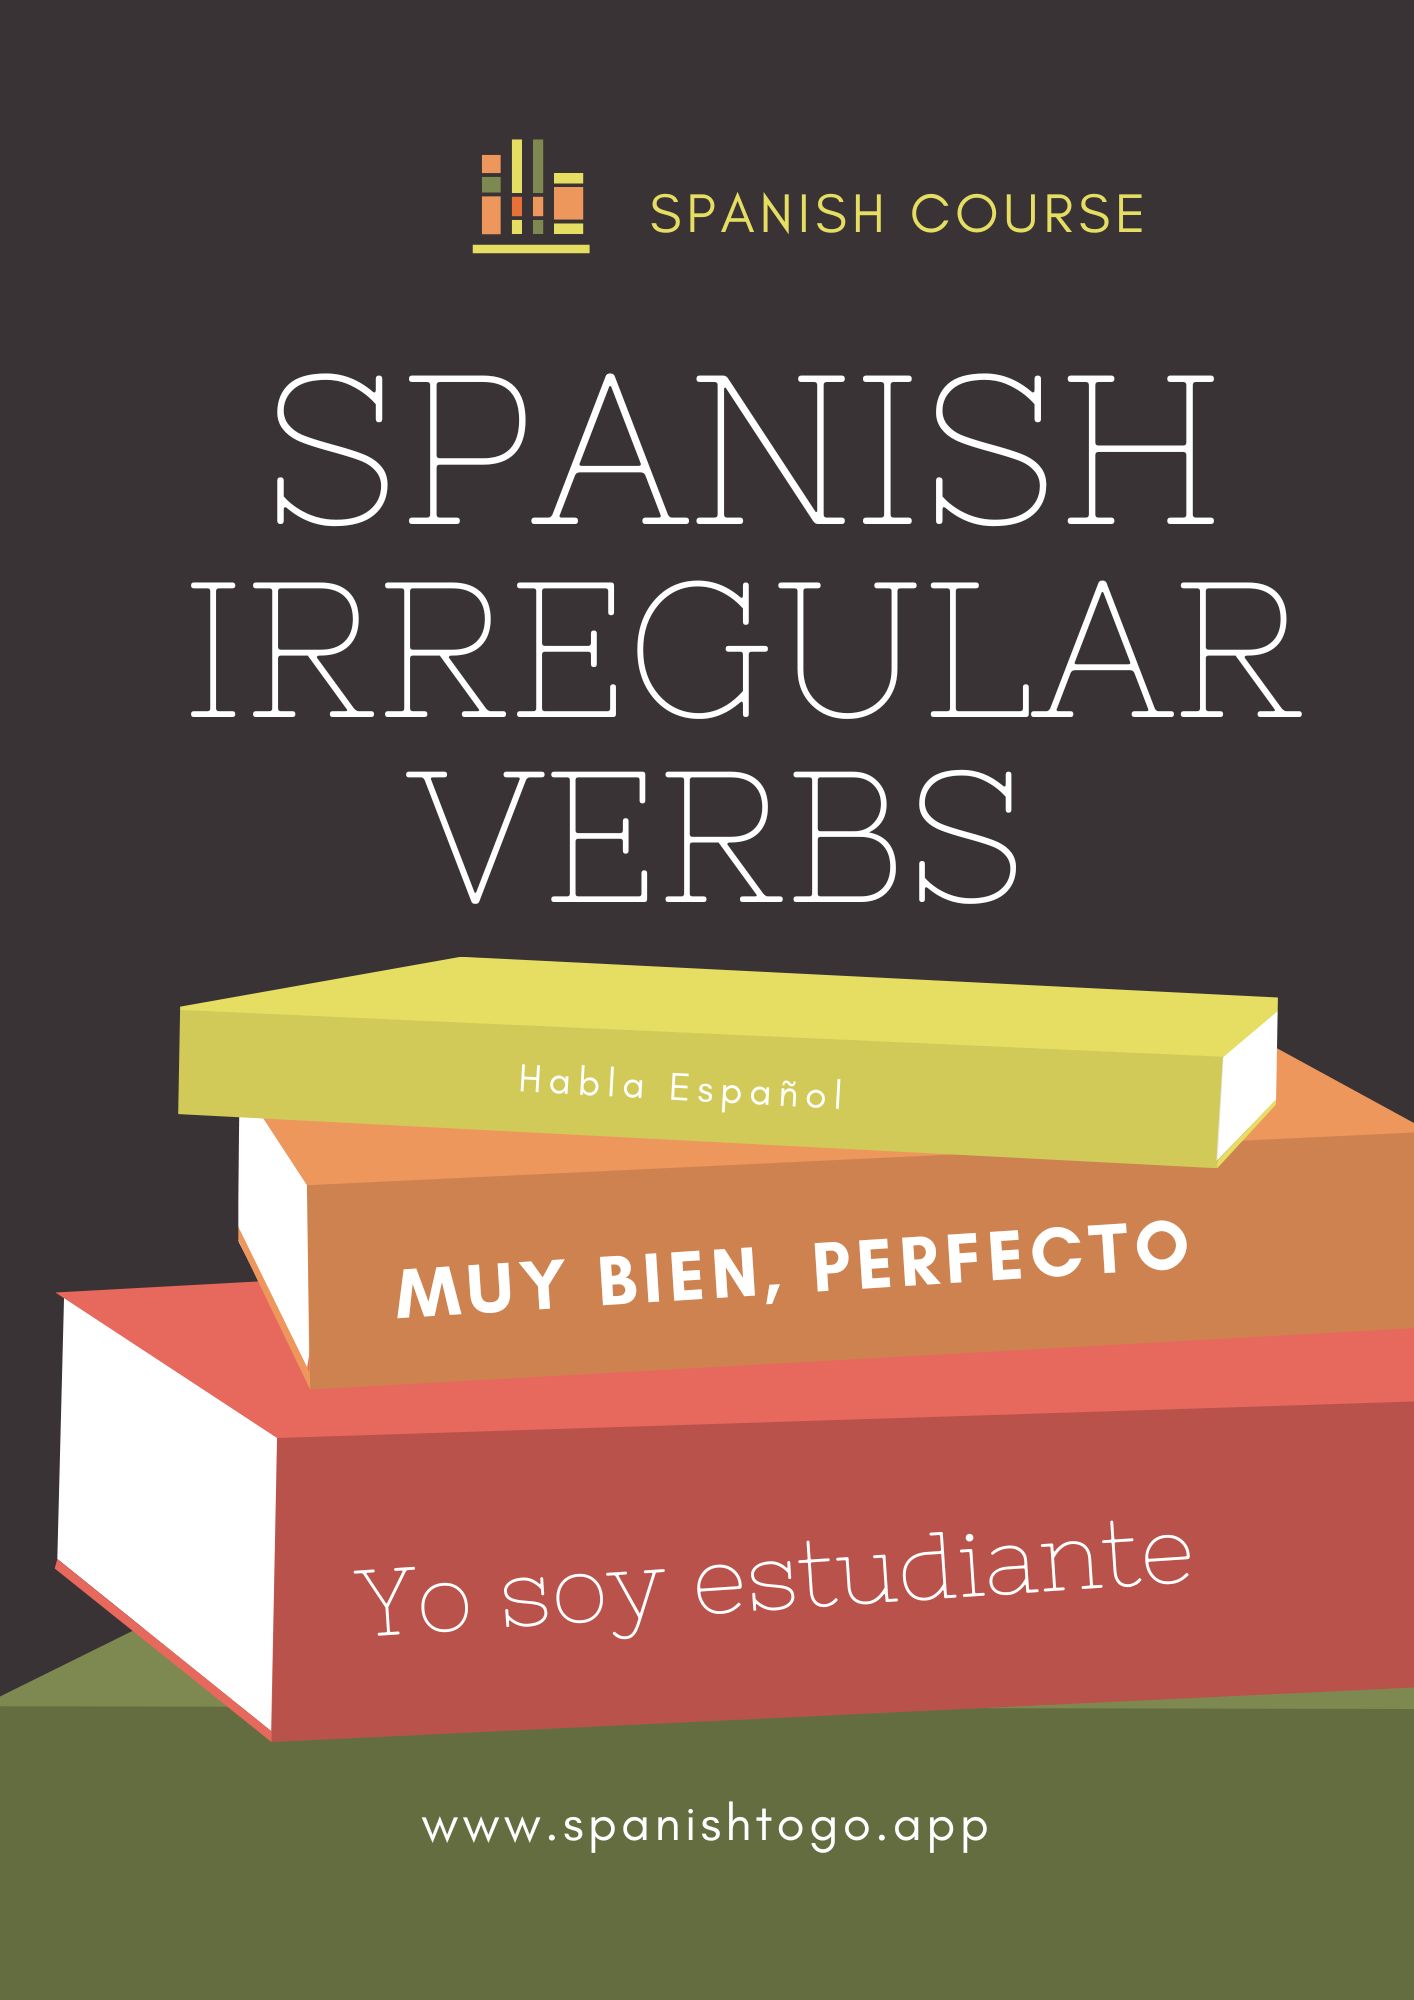 Irregular Verbs in Spanish